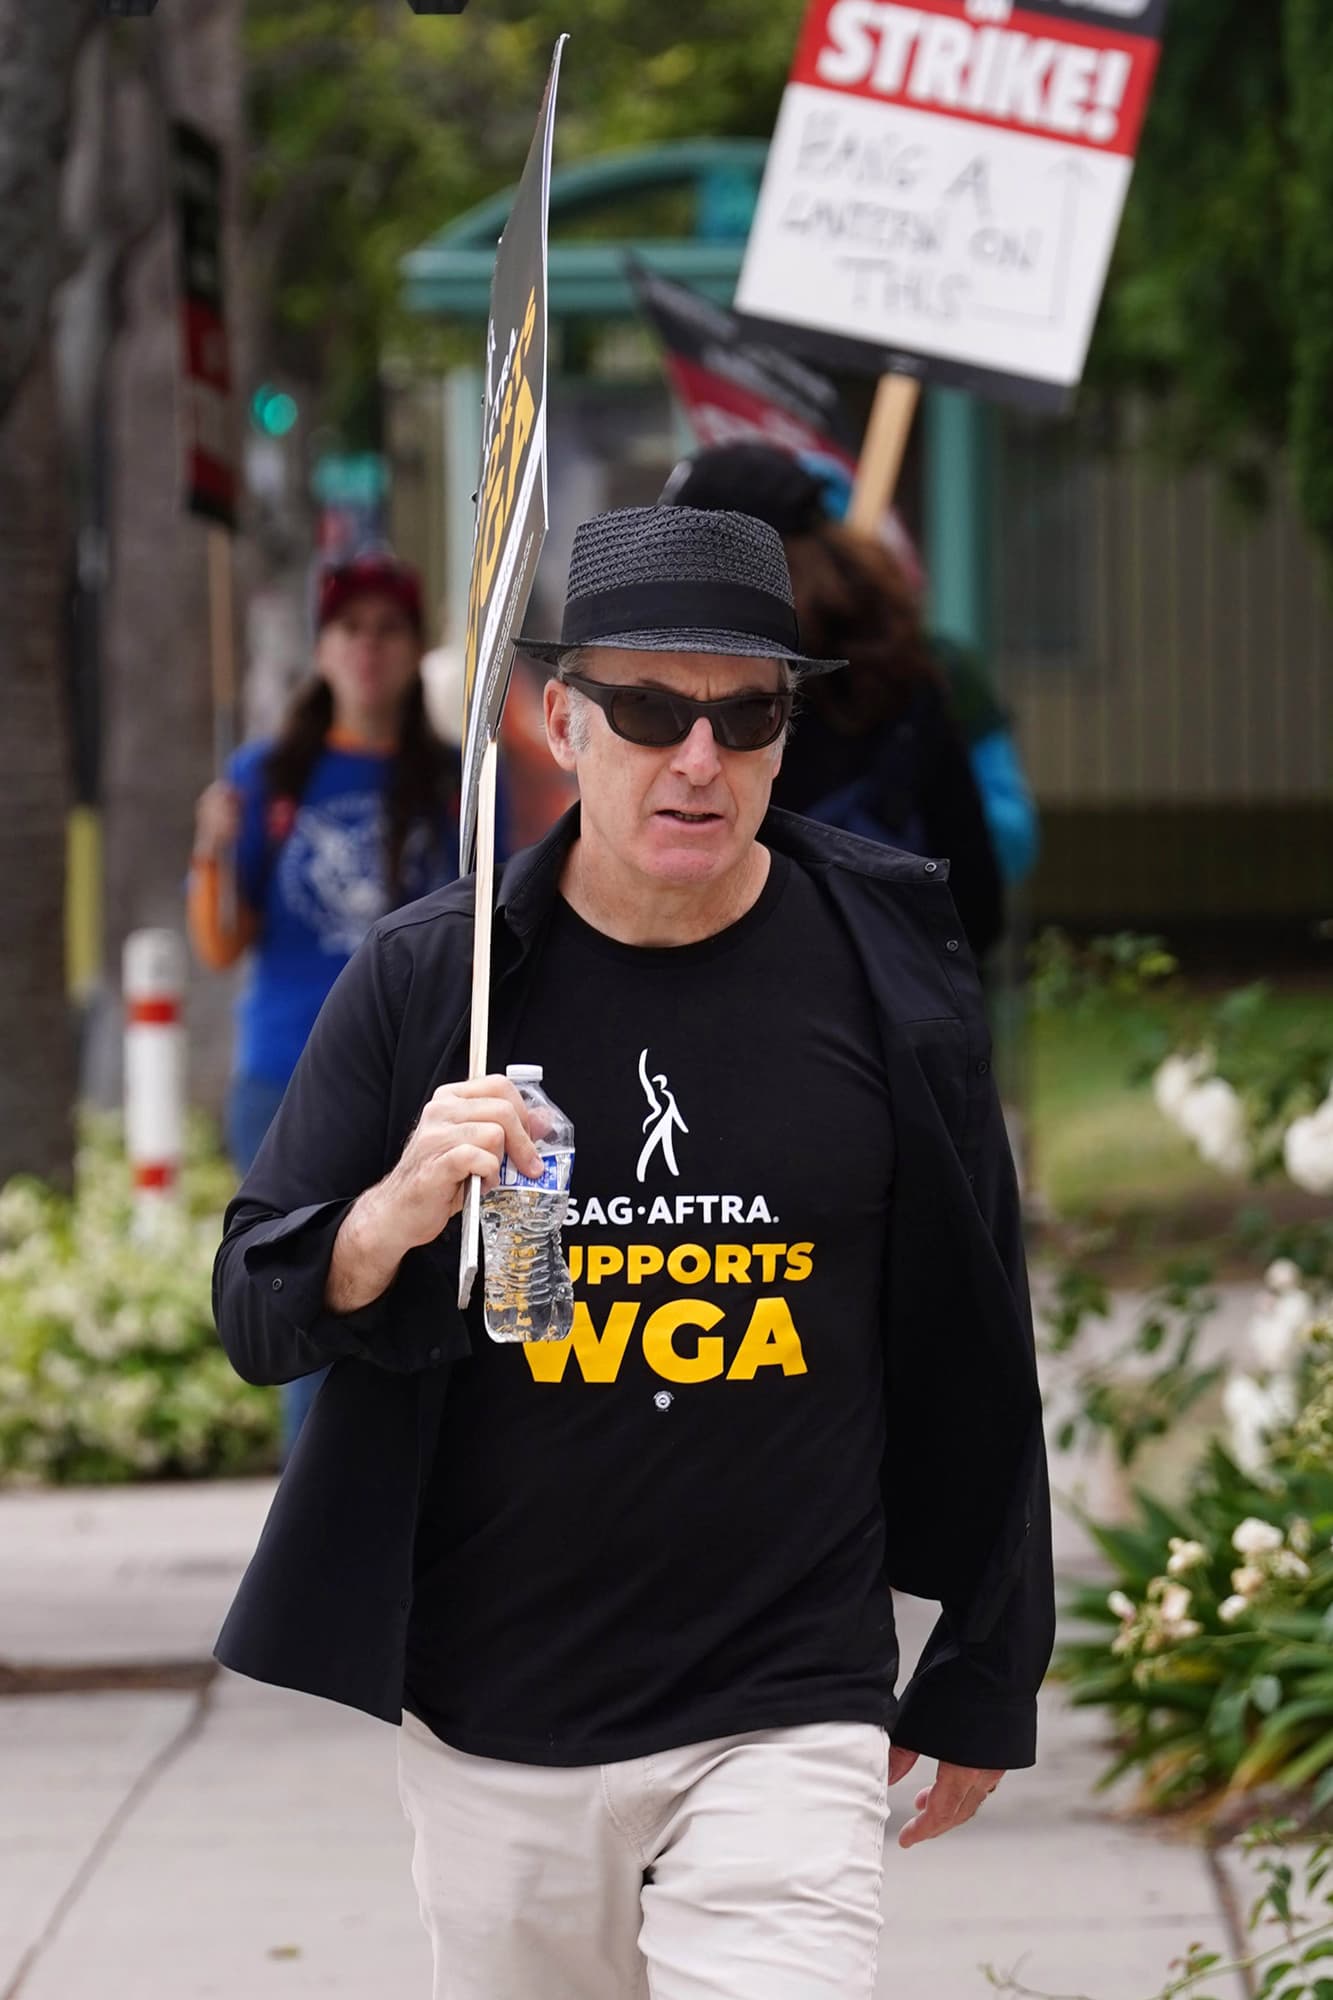 wga, writers guild of america